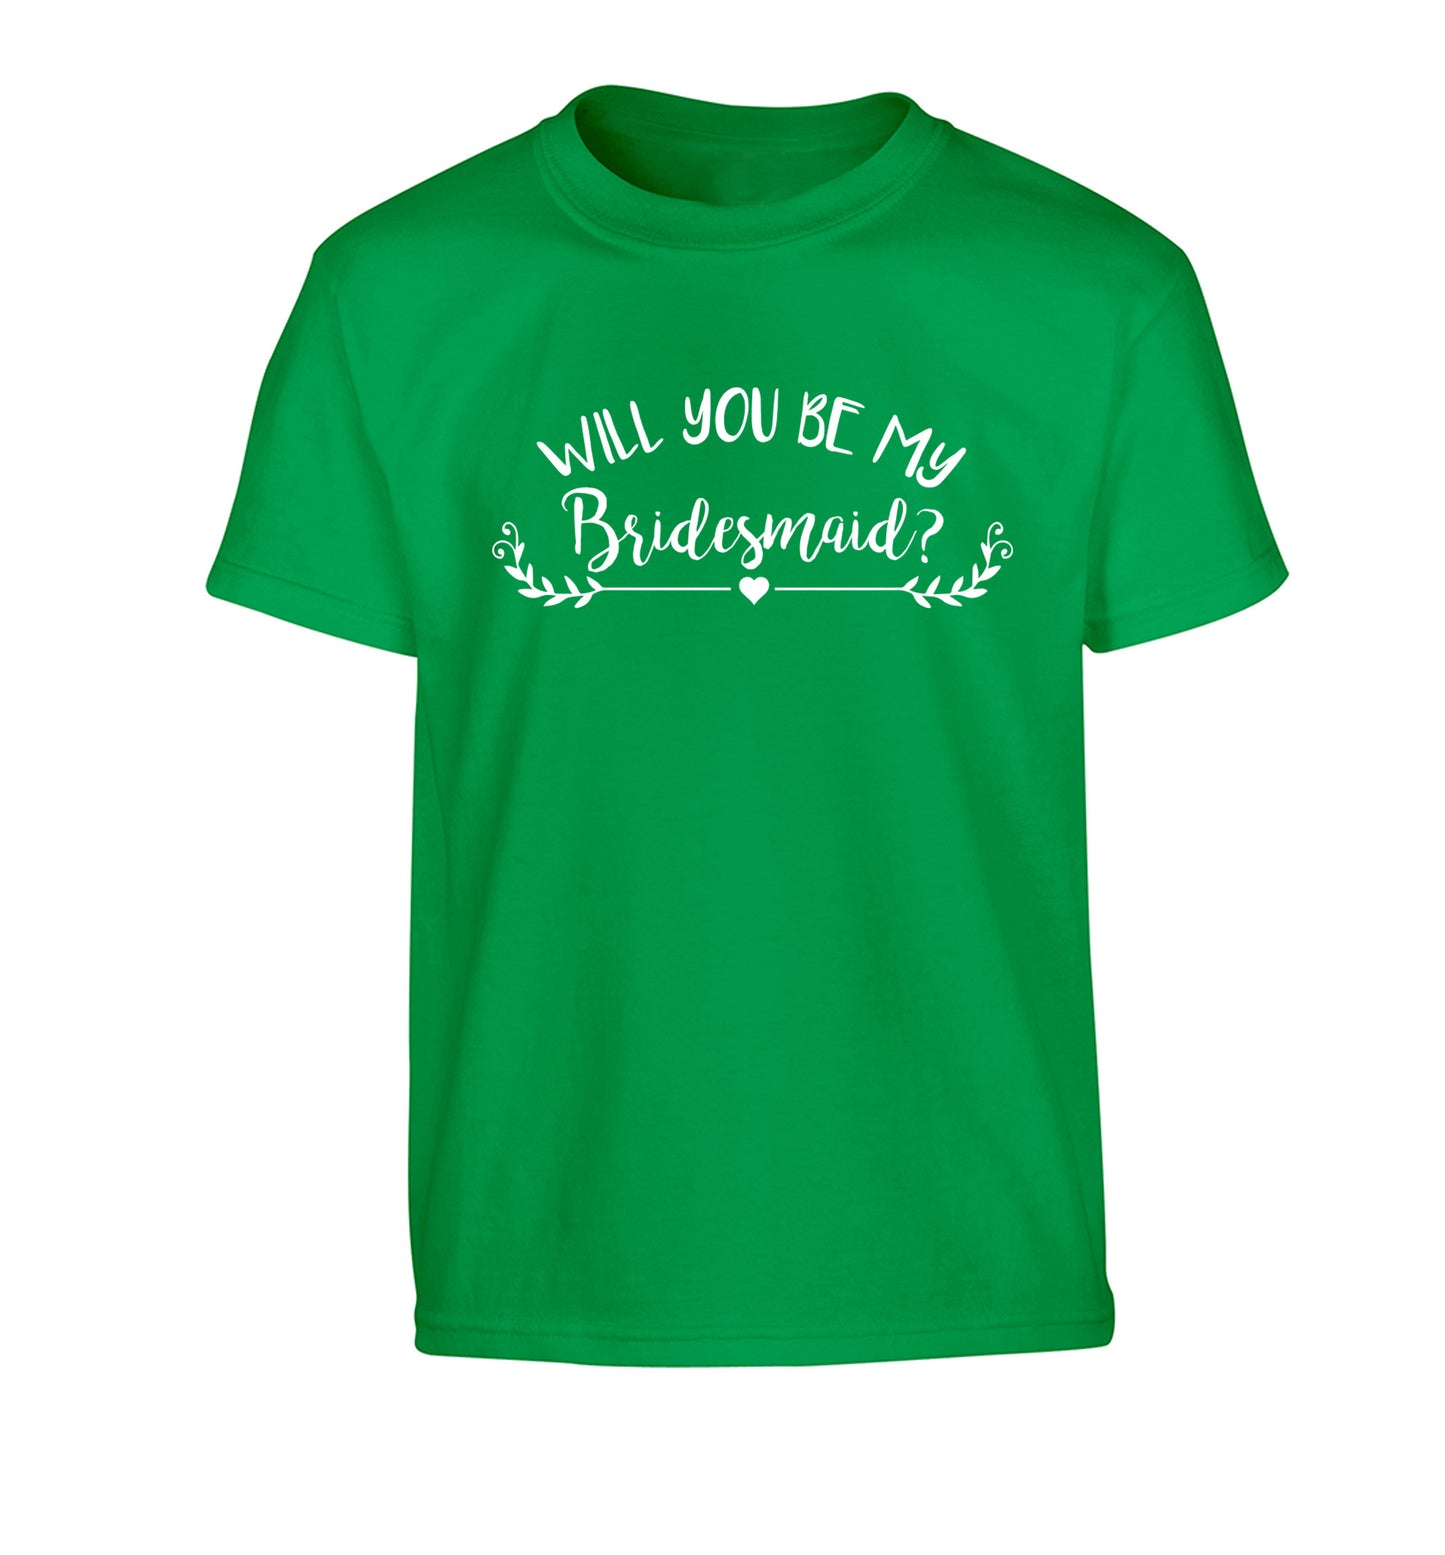 Will you be my bridesmaid? Children's green Tshirt 12-14 Years